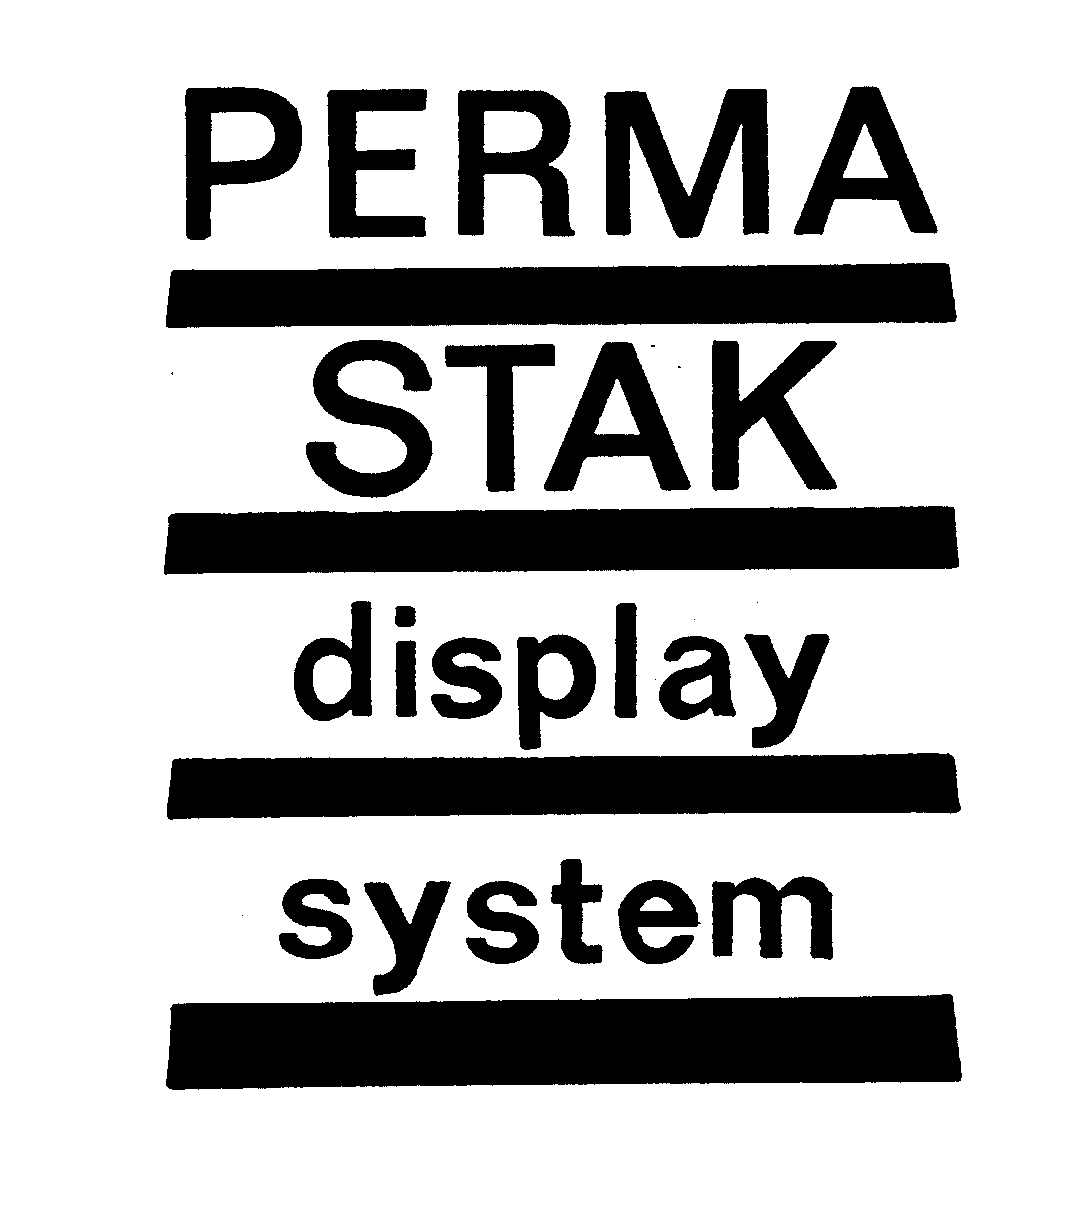  PERMA STAK DISPLAY SYSTEM